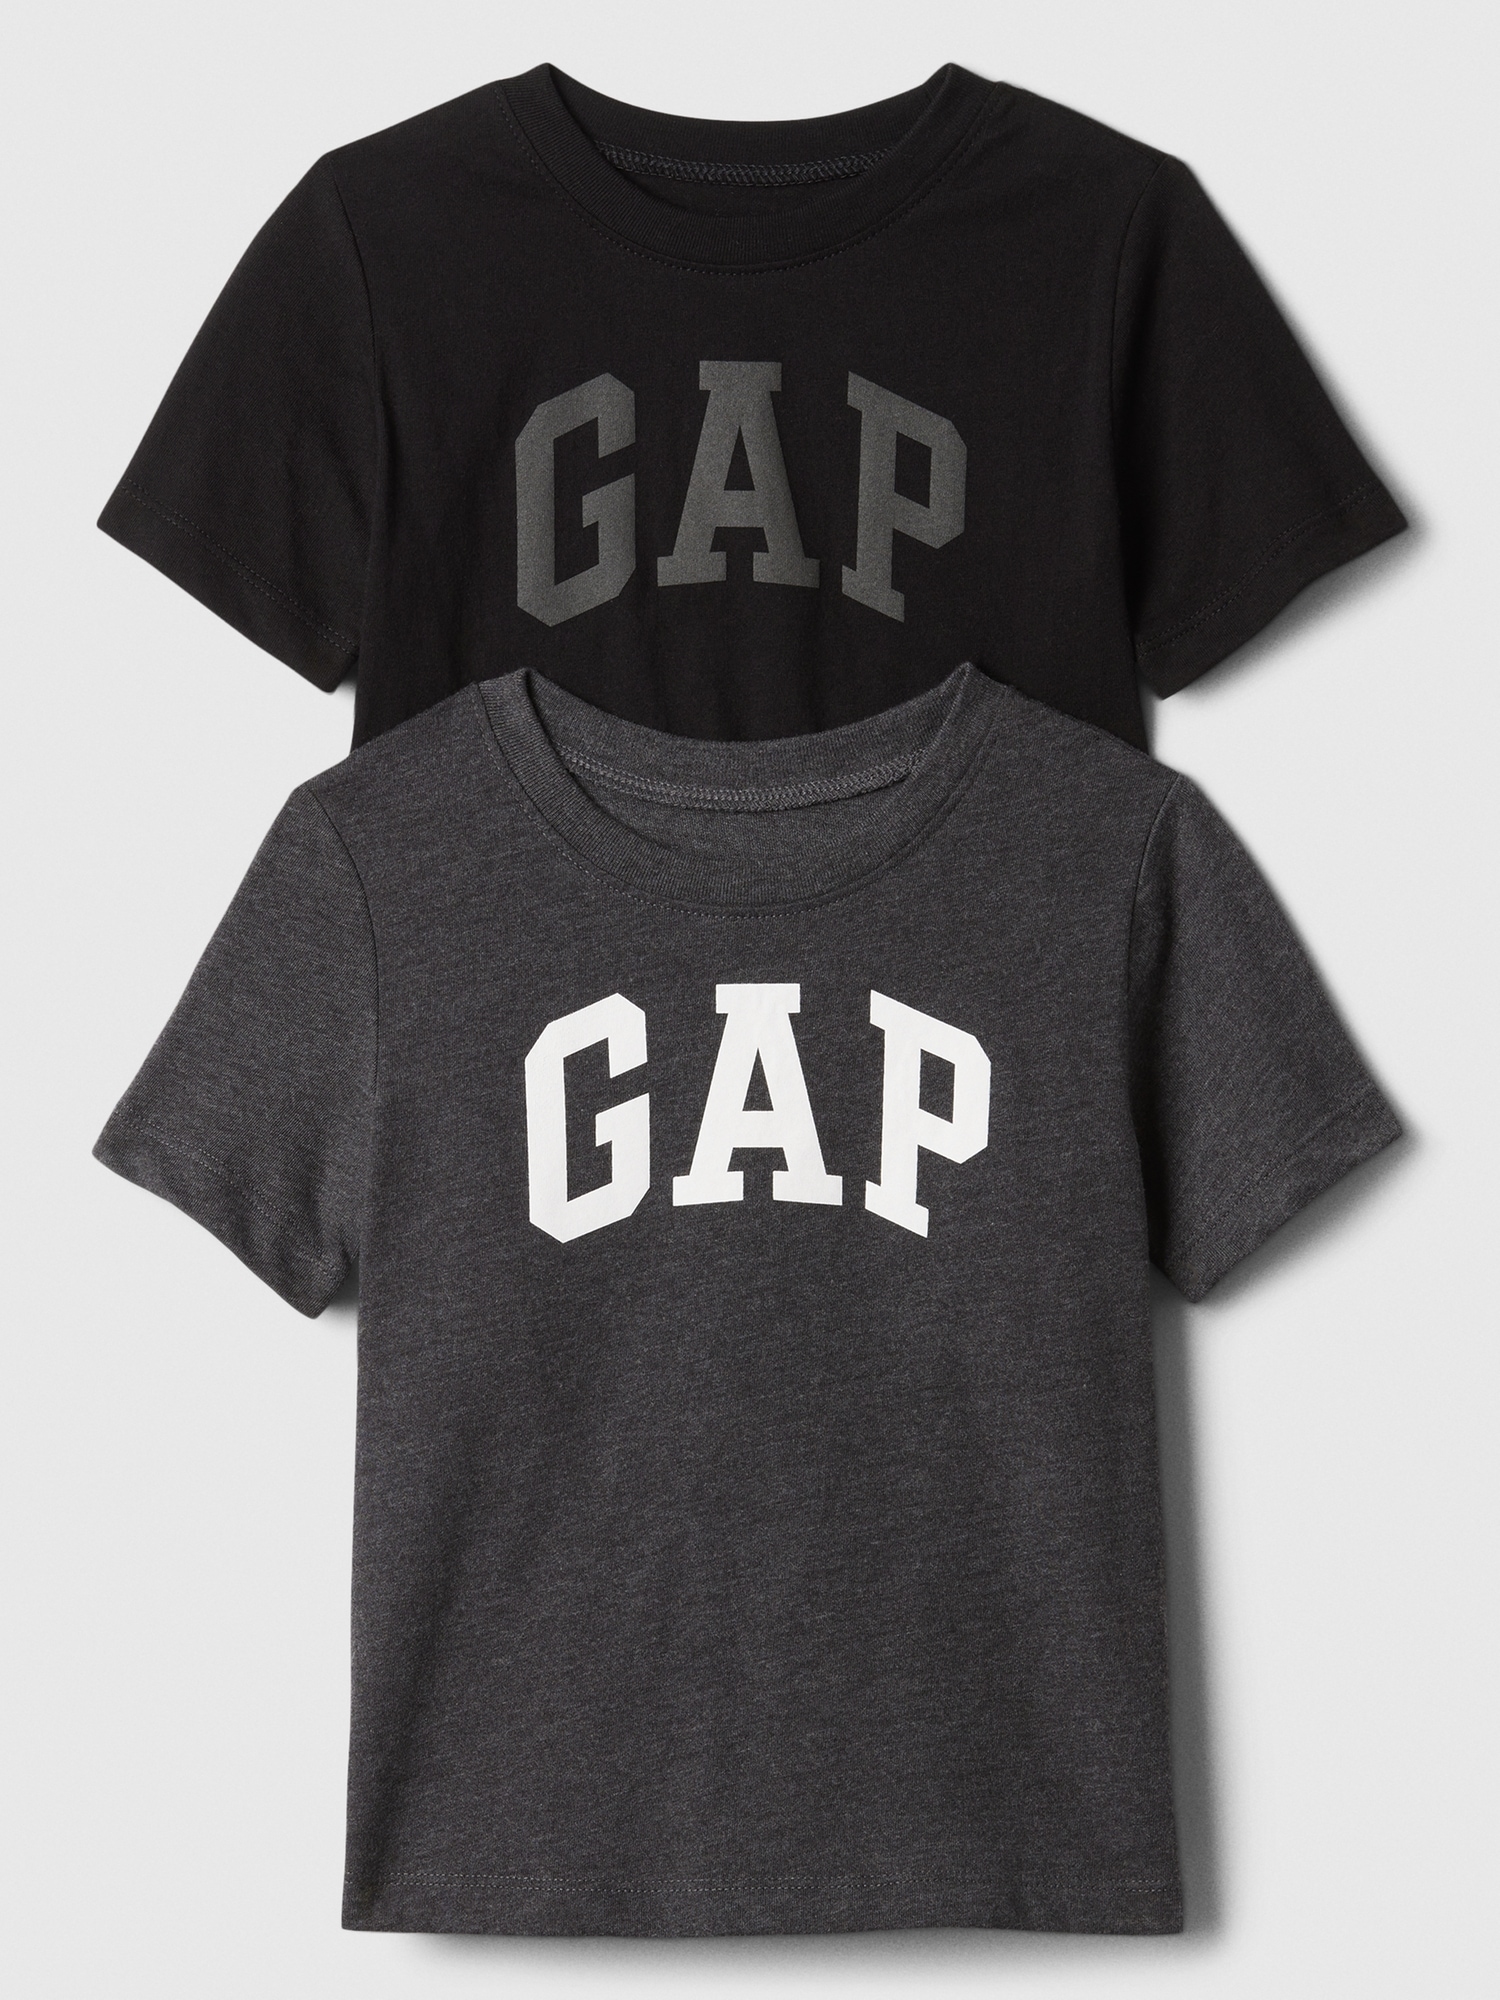 GAP Children's T-shirts with logo, 2pcs - Boys